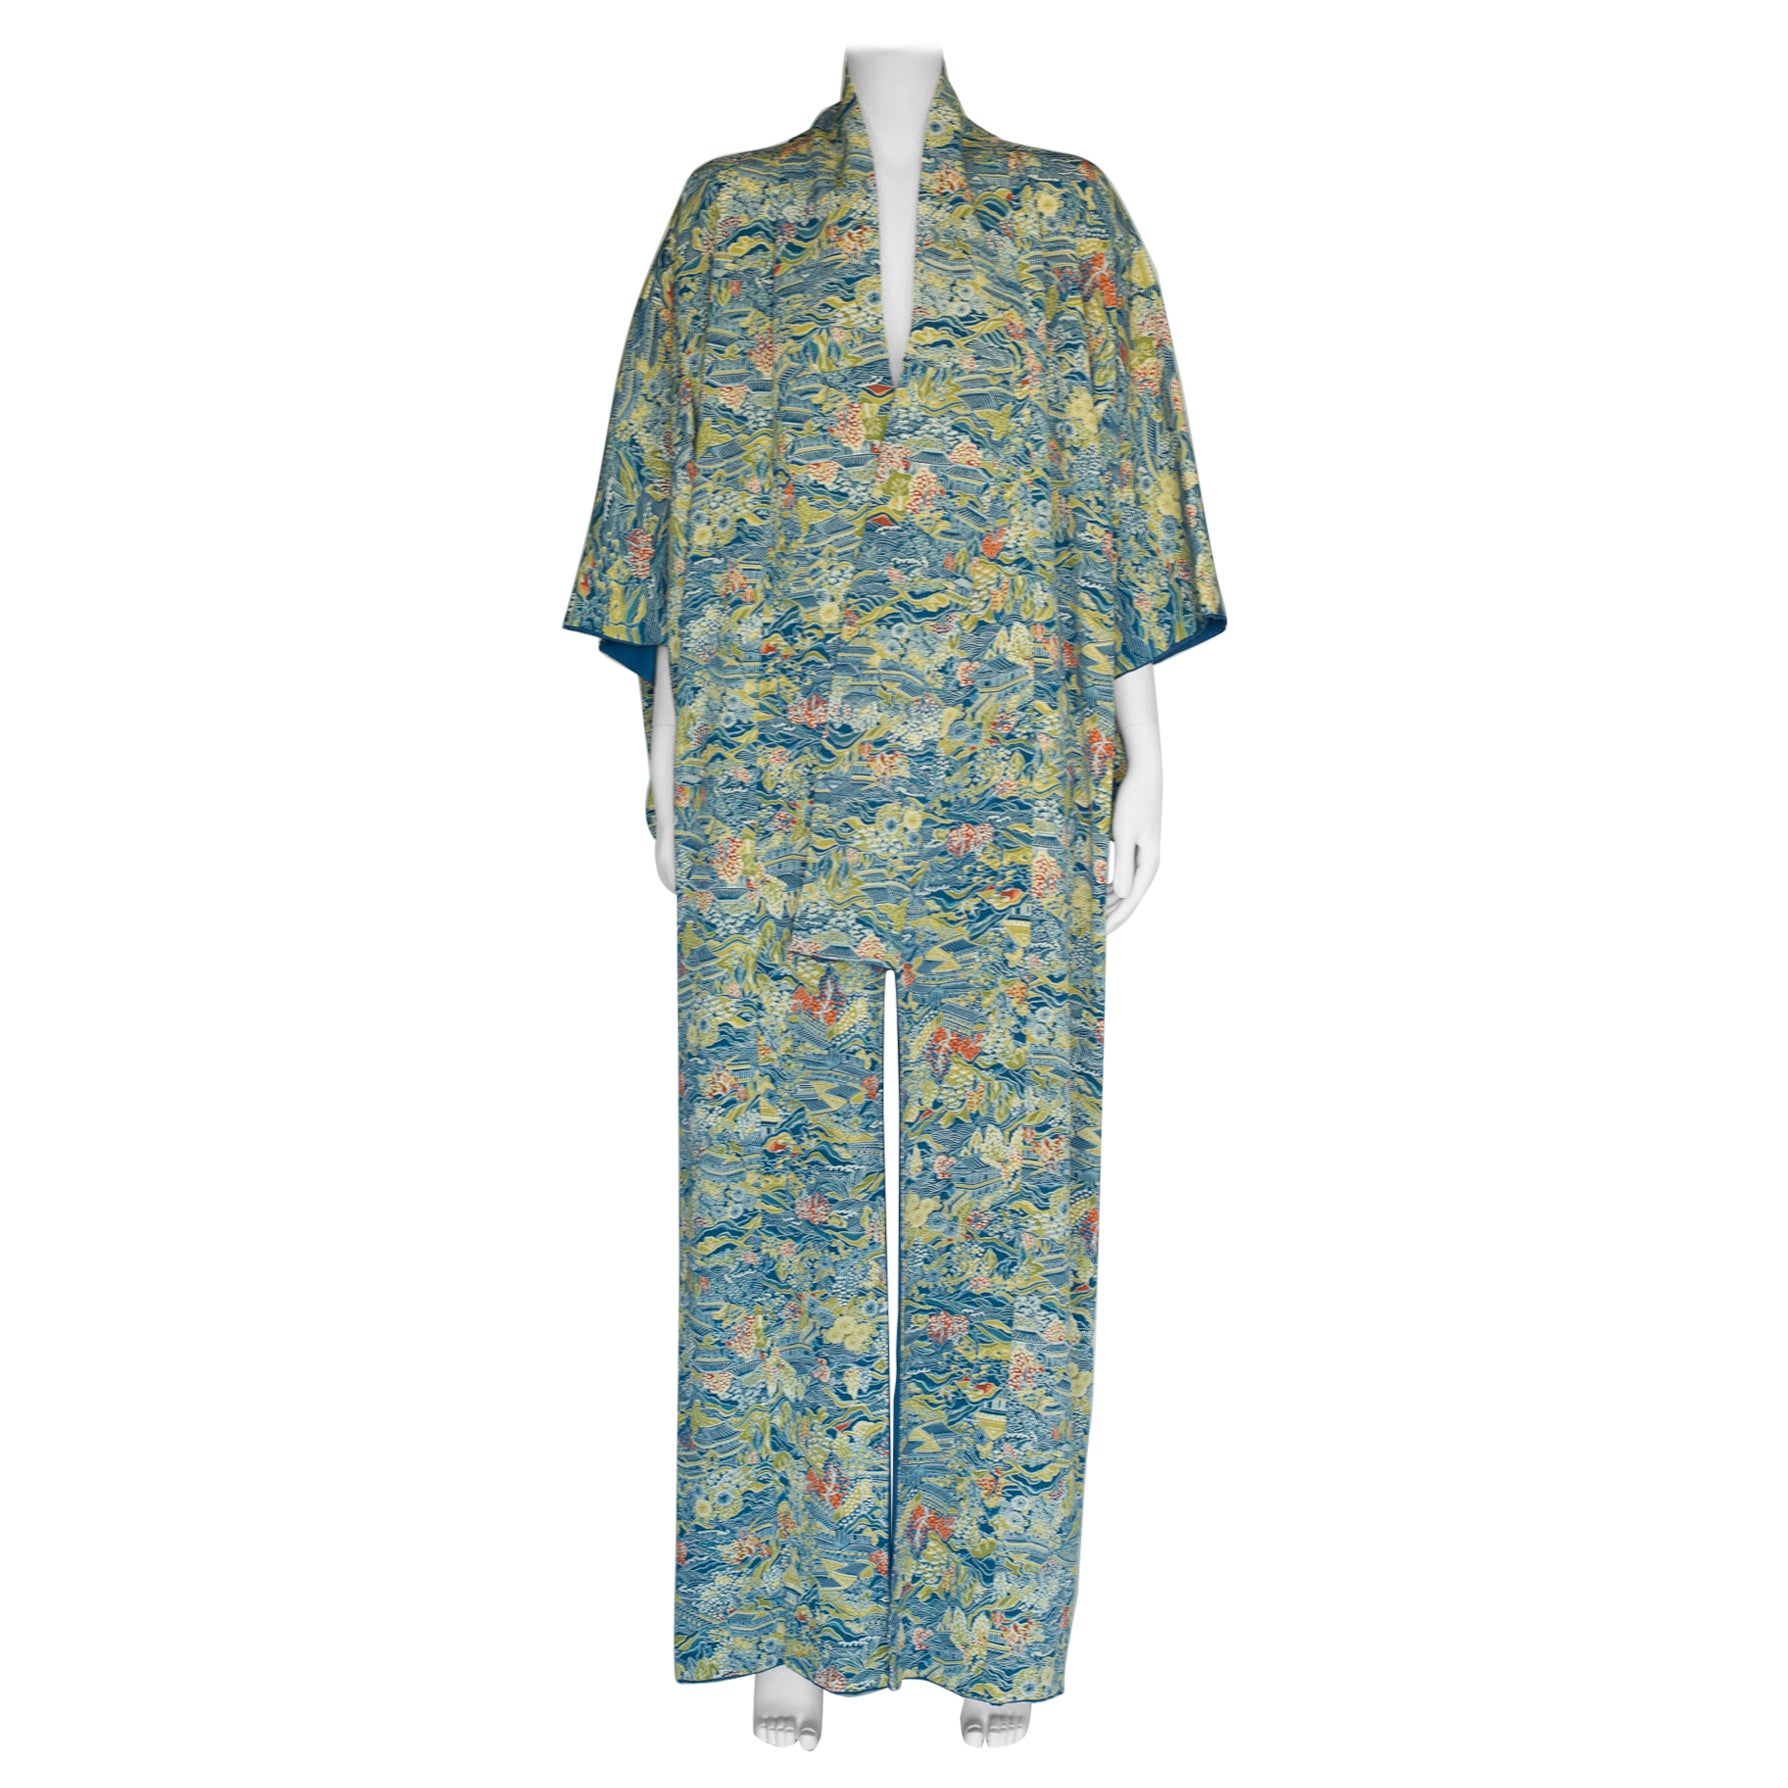 What is a silk kimono?